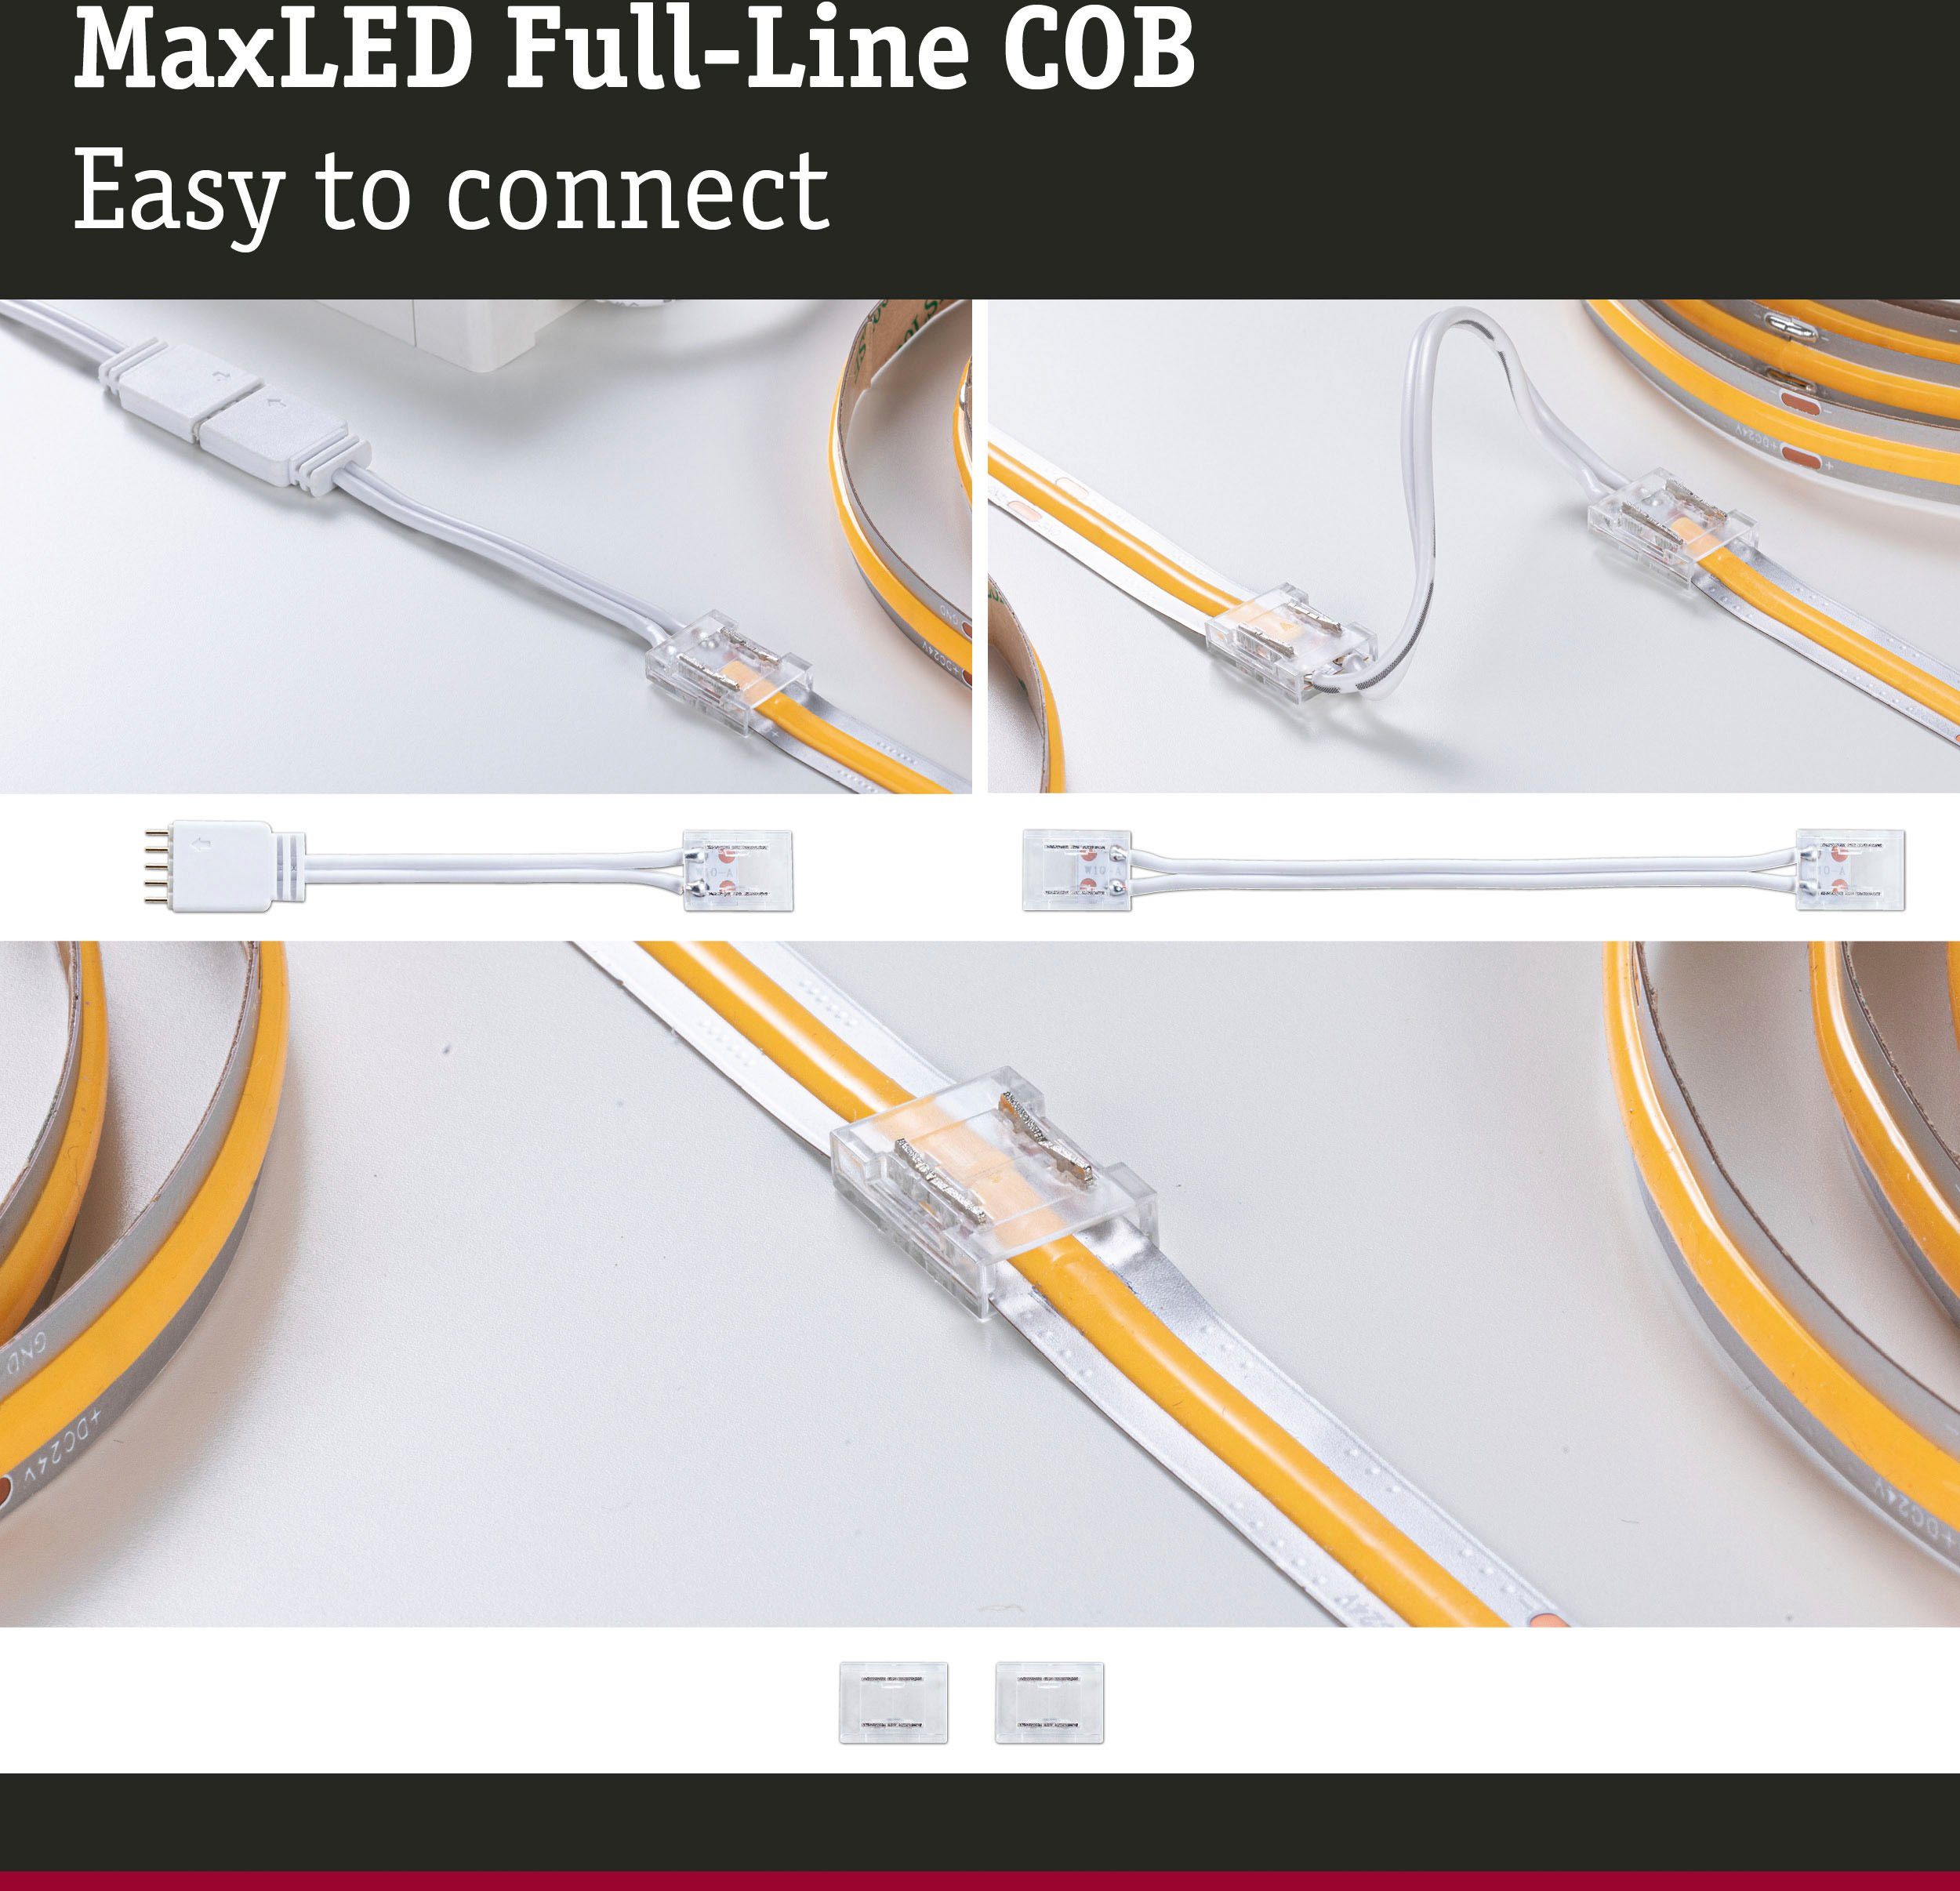 COB 1000 Connector LED-Streifen Set Paulmann MaxLED 2er-Set 133m Full-Line